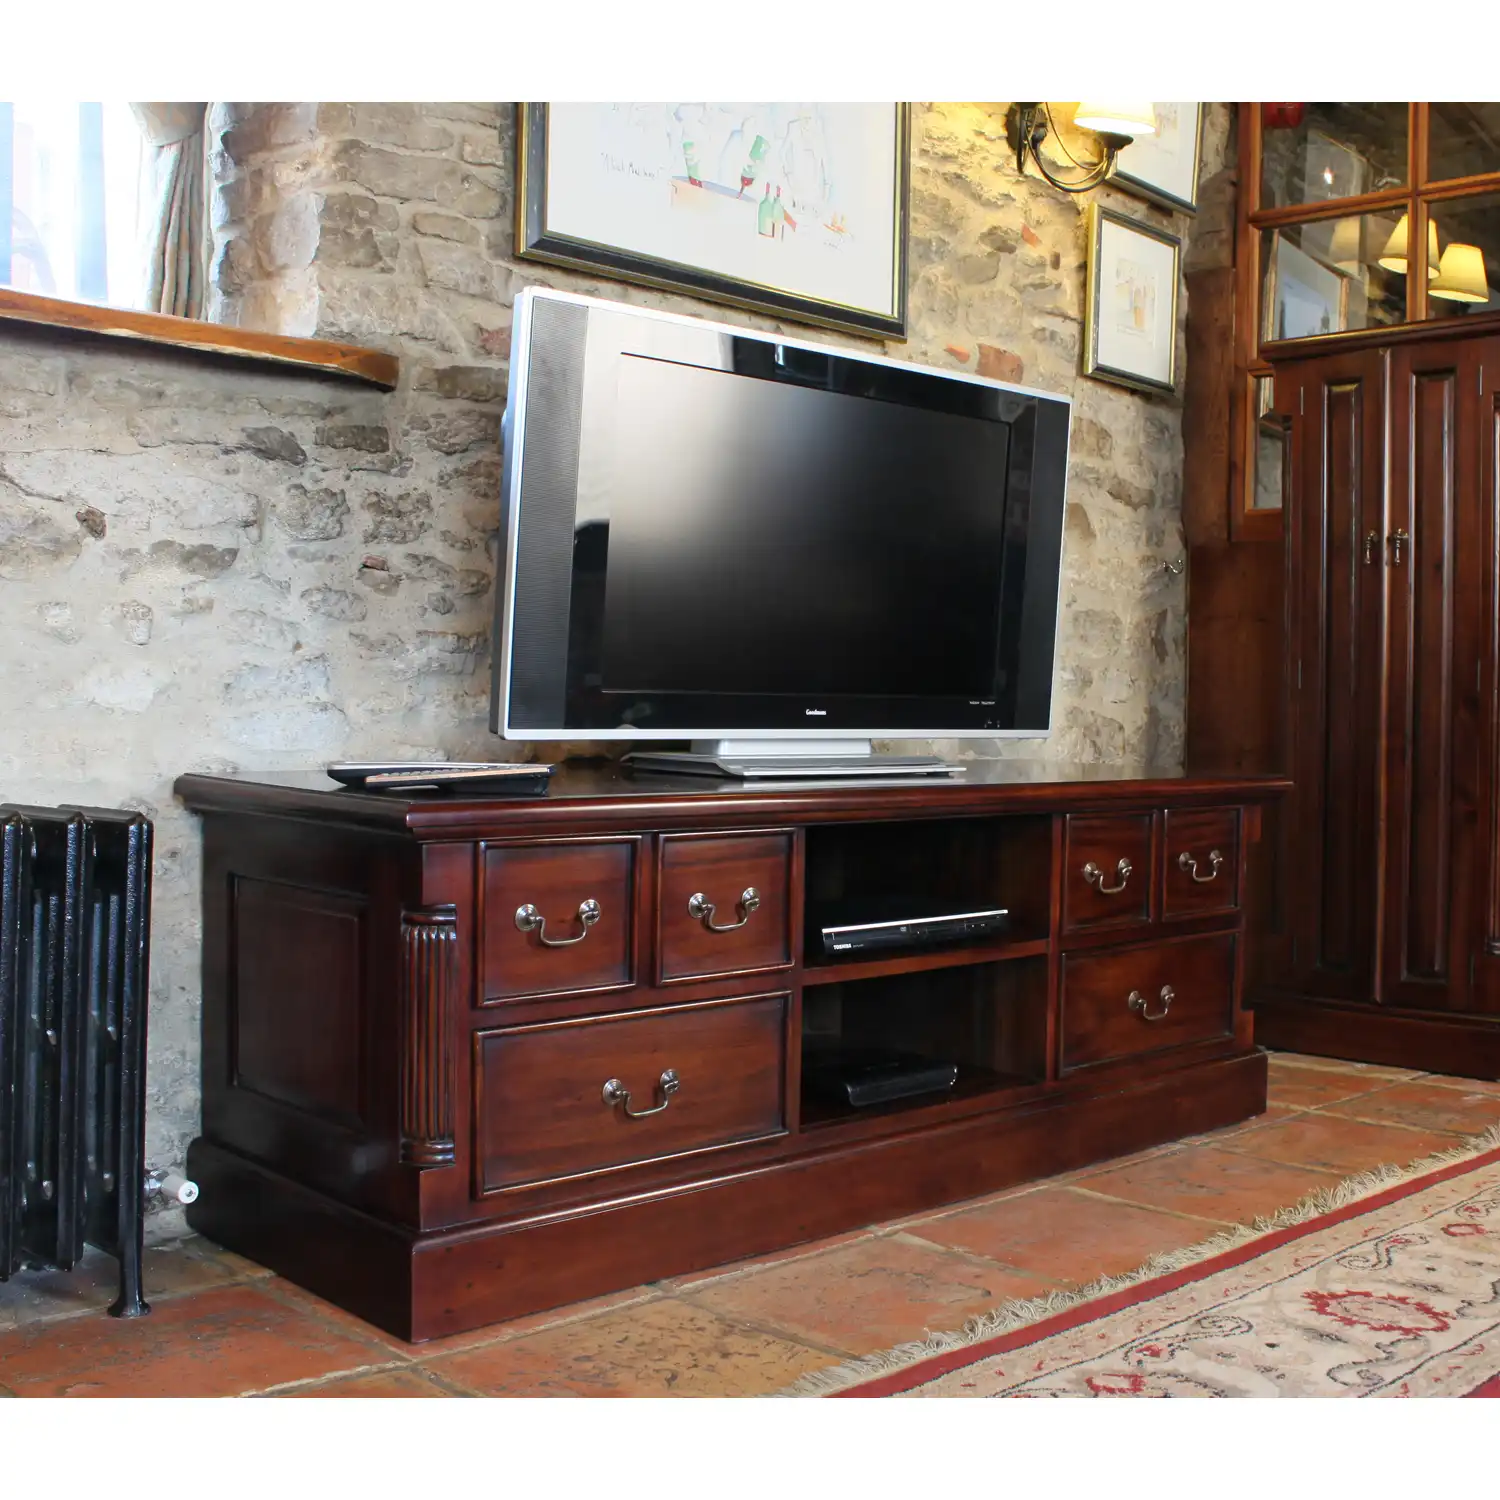 Large Mahogany Widescreen TV Cabinet Traditional Dark Wood Finish